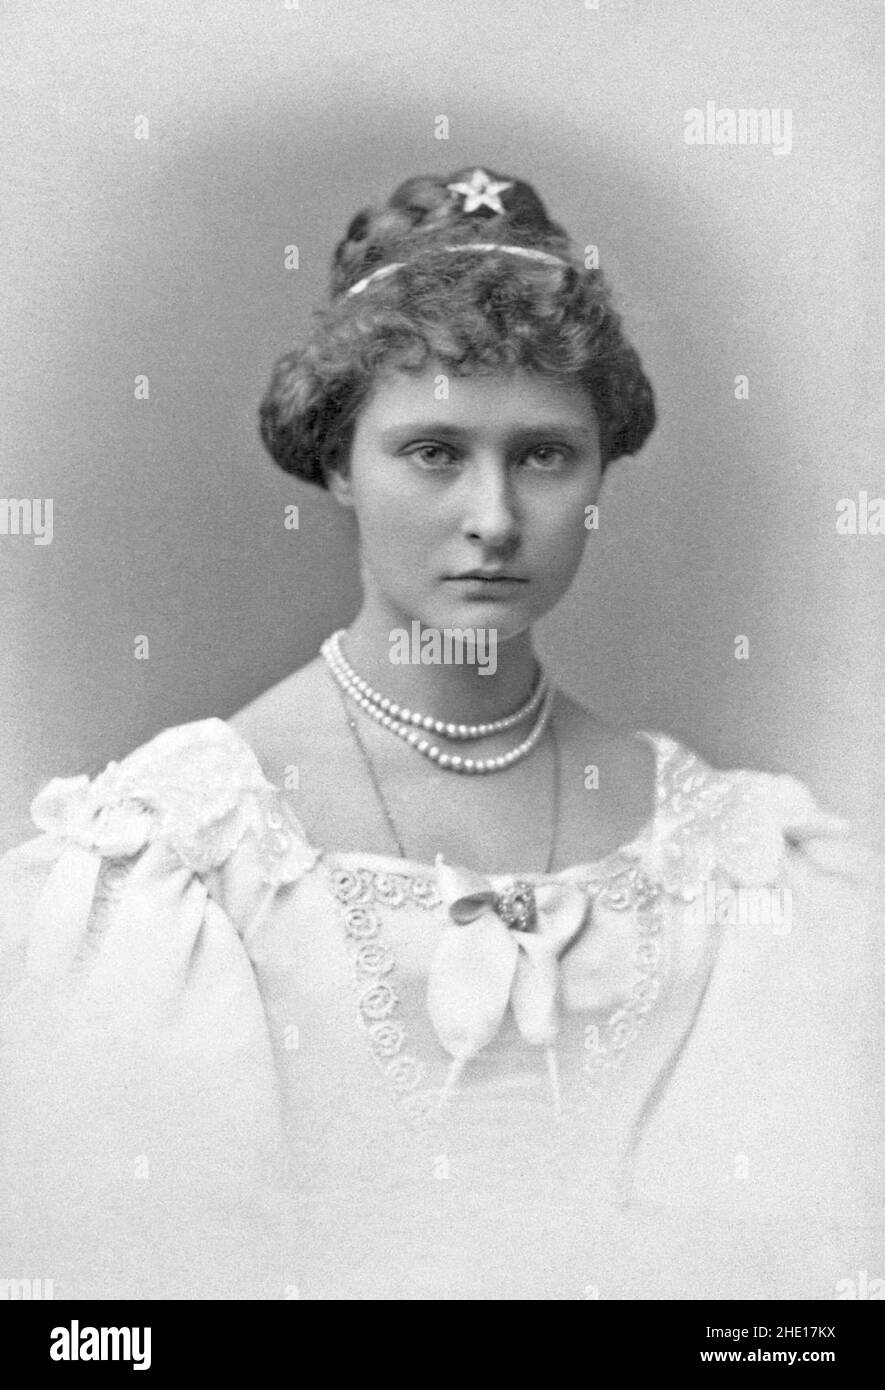 The wife of Tsar Nicholas II of Russia, Tsaritsa Alexandra Fyodorovna (Alix of Hesse) aged 15. Stock Photo